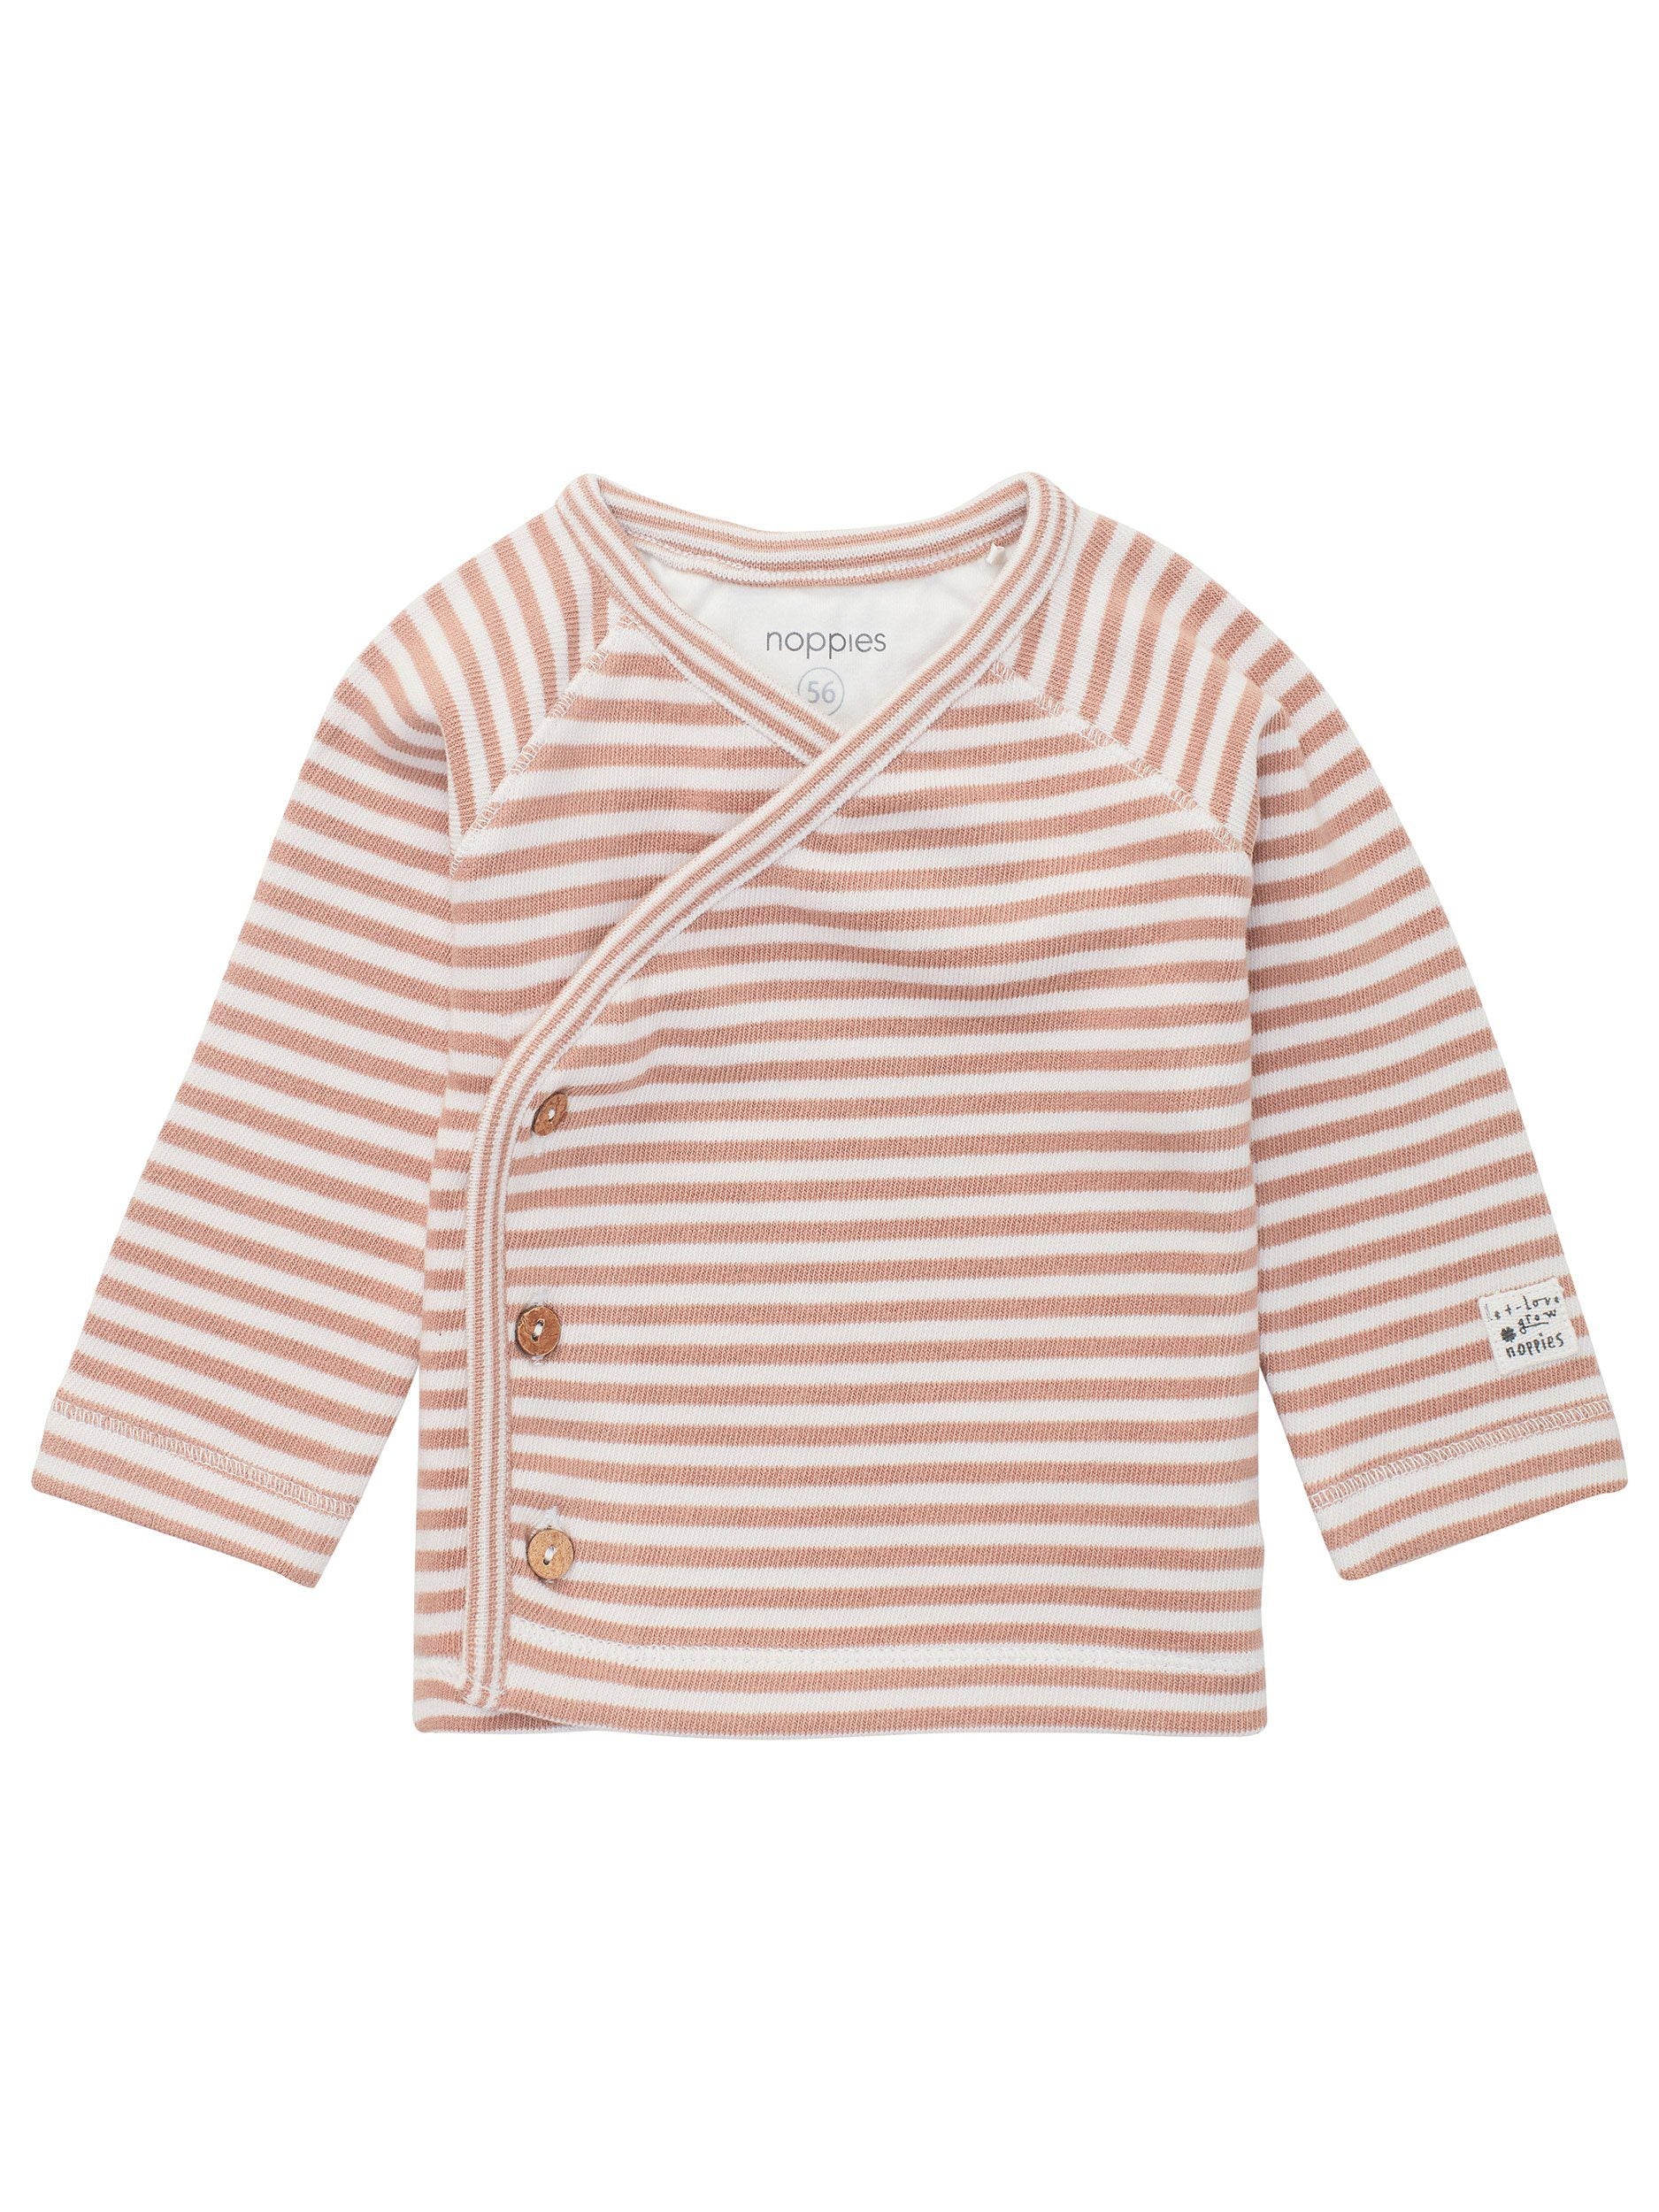 Long Sleeve Knit Top - Terracotta & Cream Stripe Top / T-shirt Noppies 